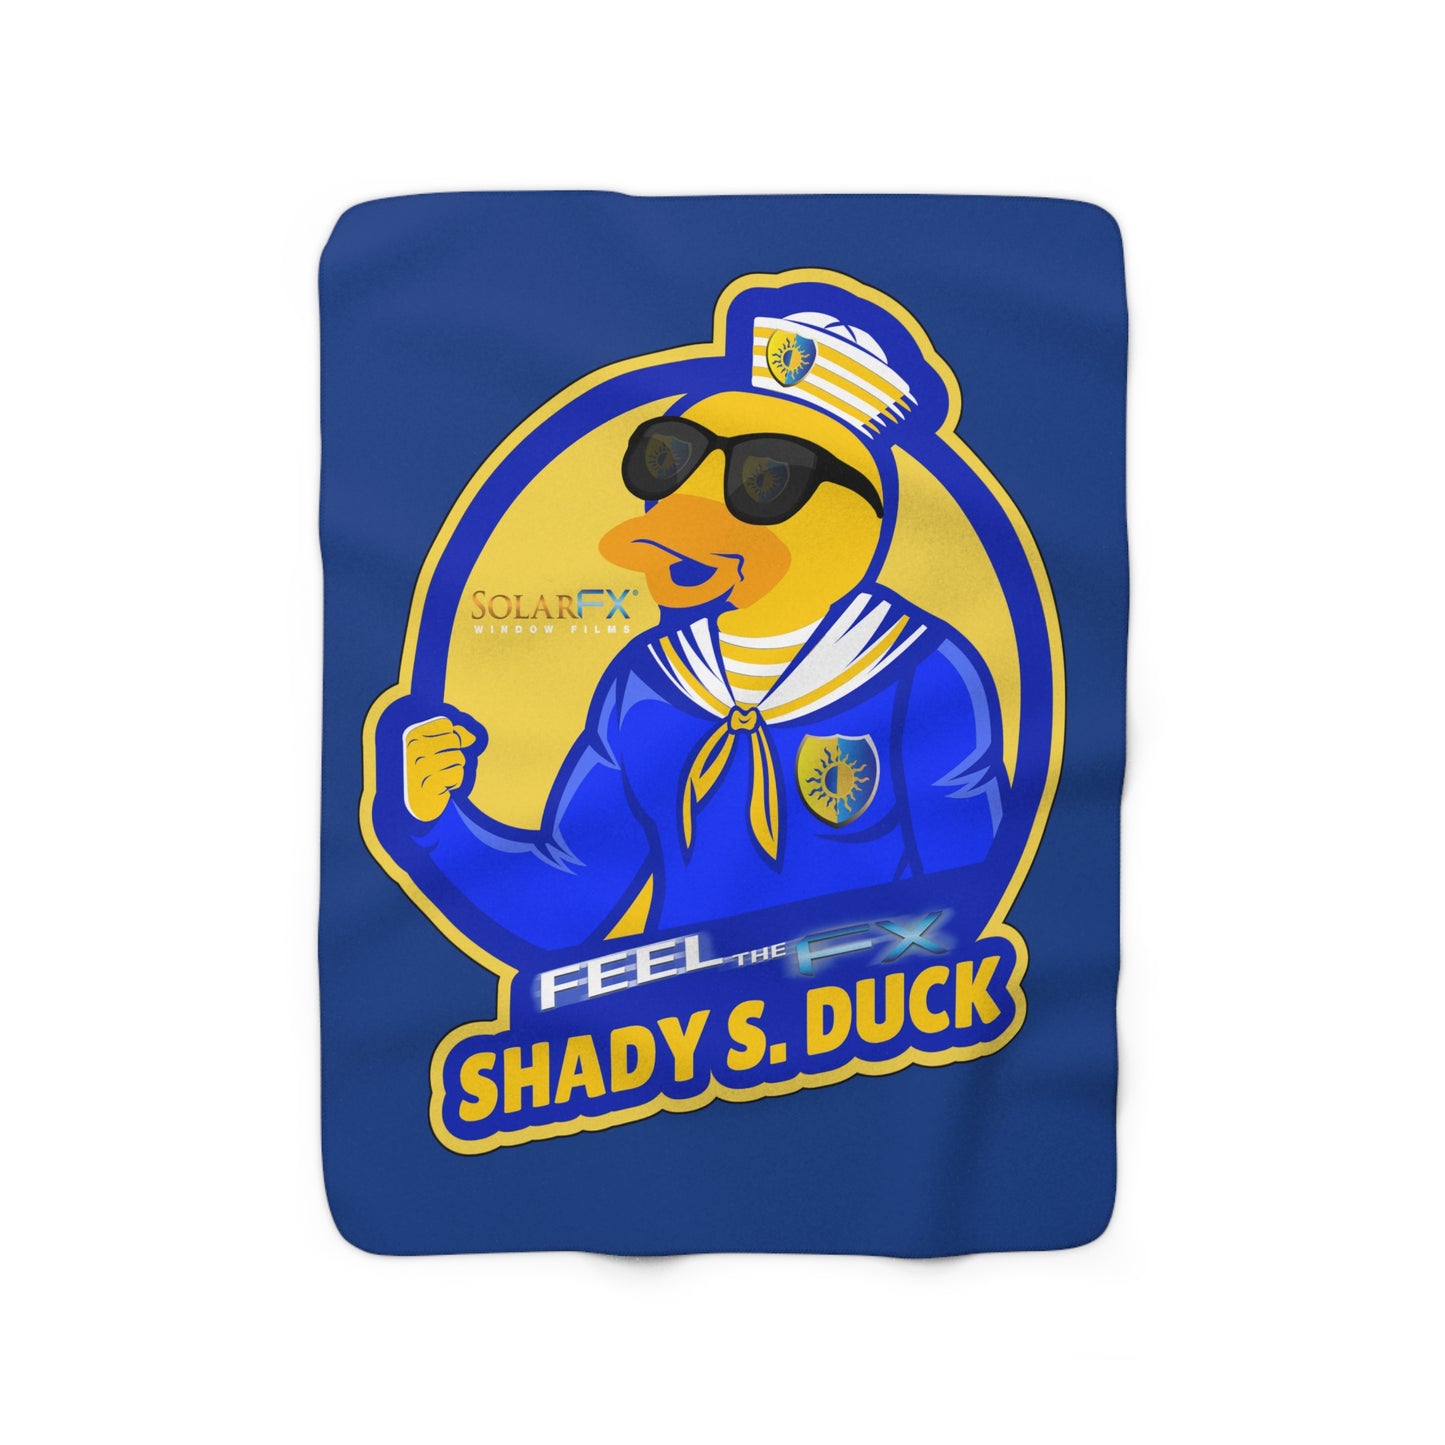 Shady S. Duck Fleece Blanket